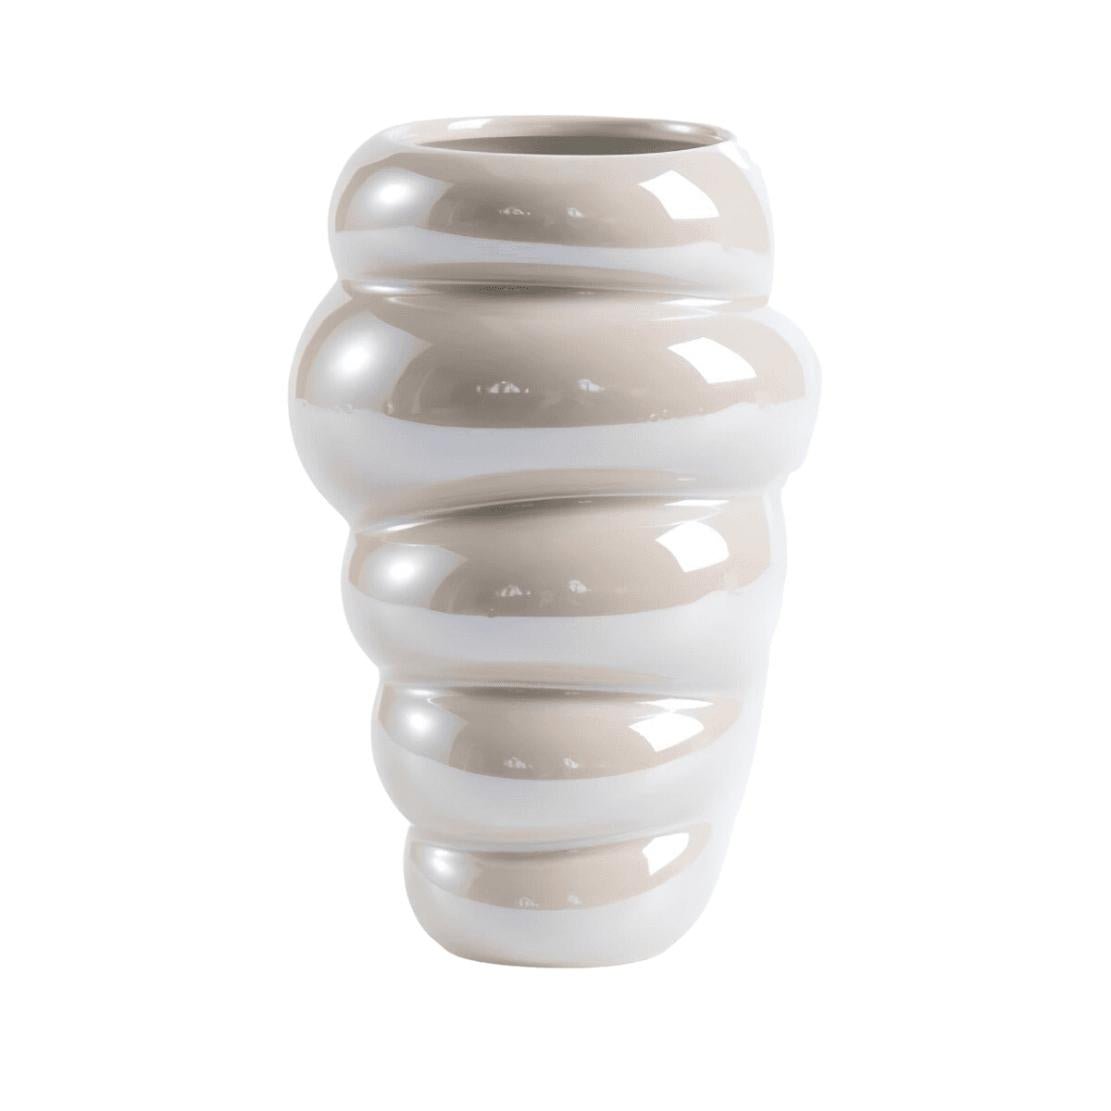 Tall, grey ceramic honeycomb vase